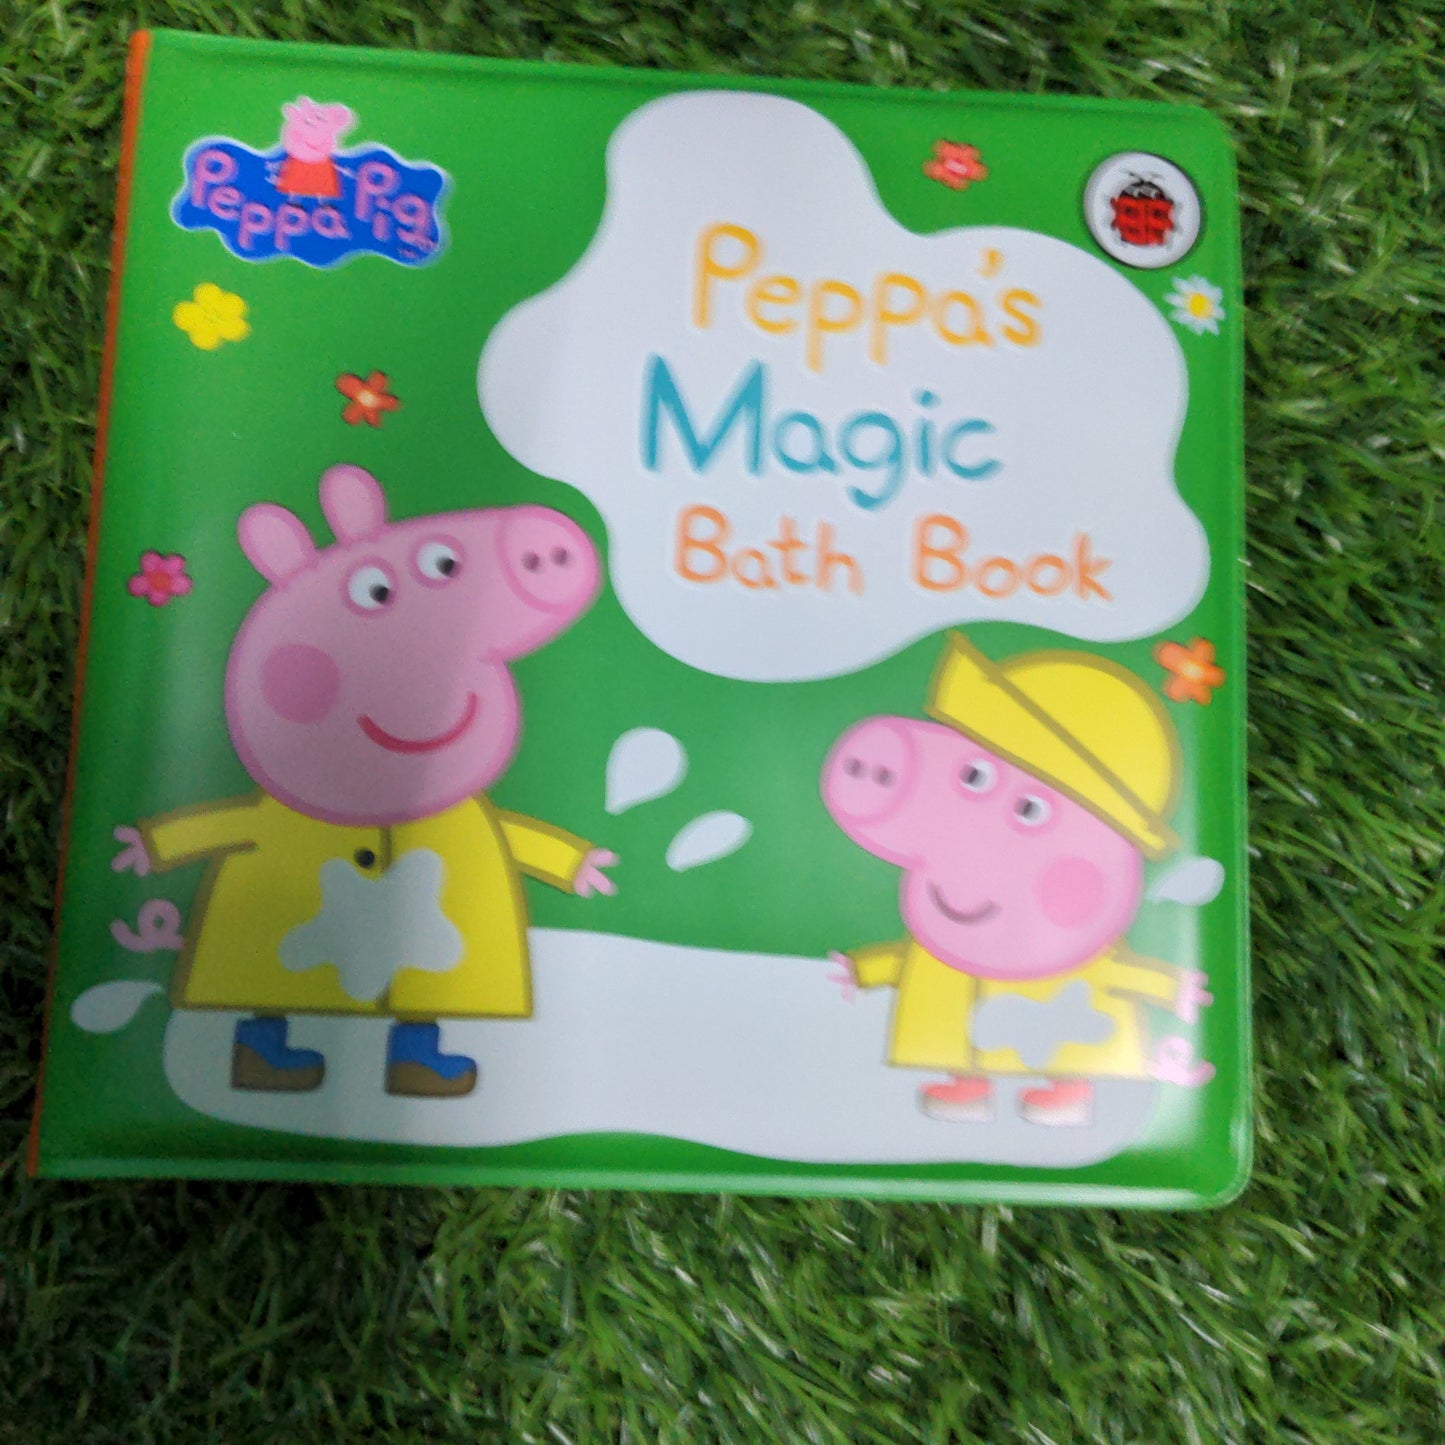 Peppa Pig: Peppa’s Magic Bath Book